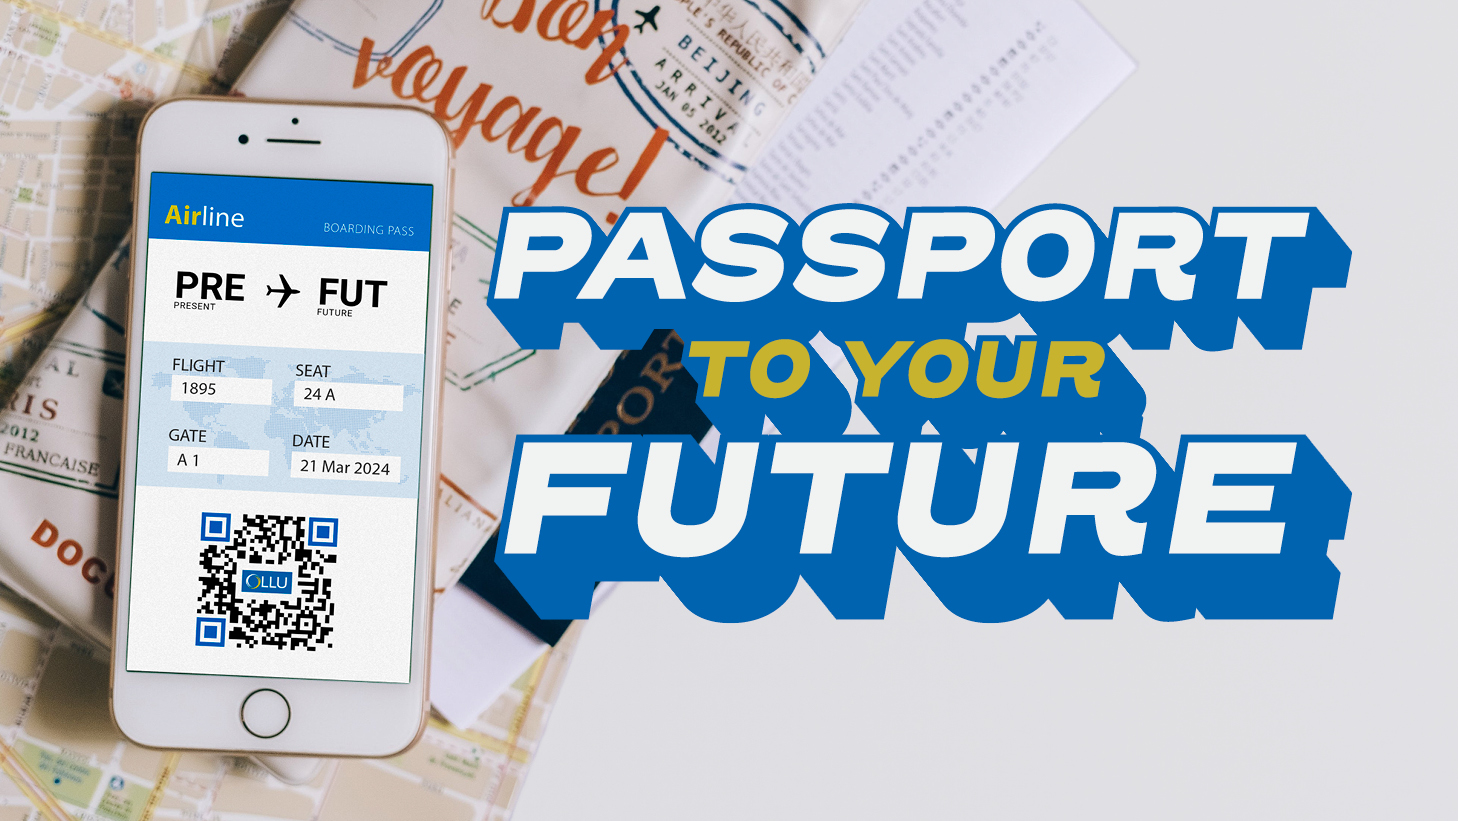 Passport to your future